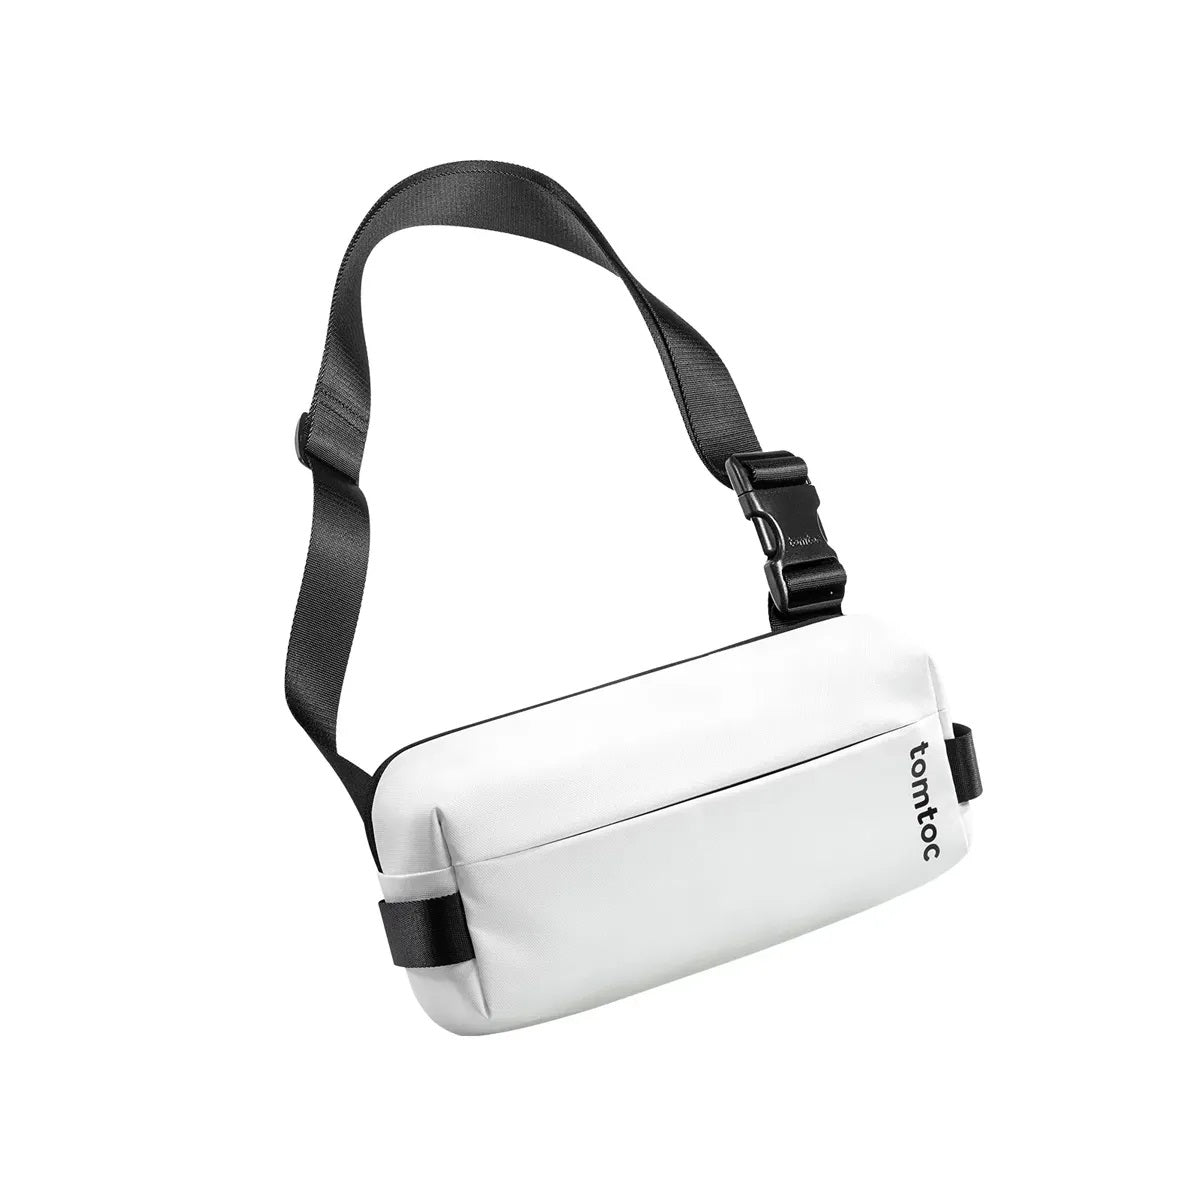 Tomtoc Explorer-H02 Urban Sling Bag with Minimalist EDC Design